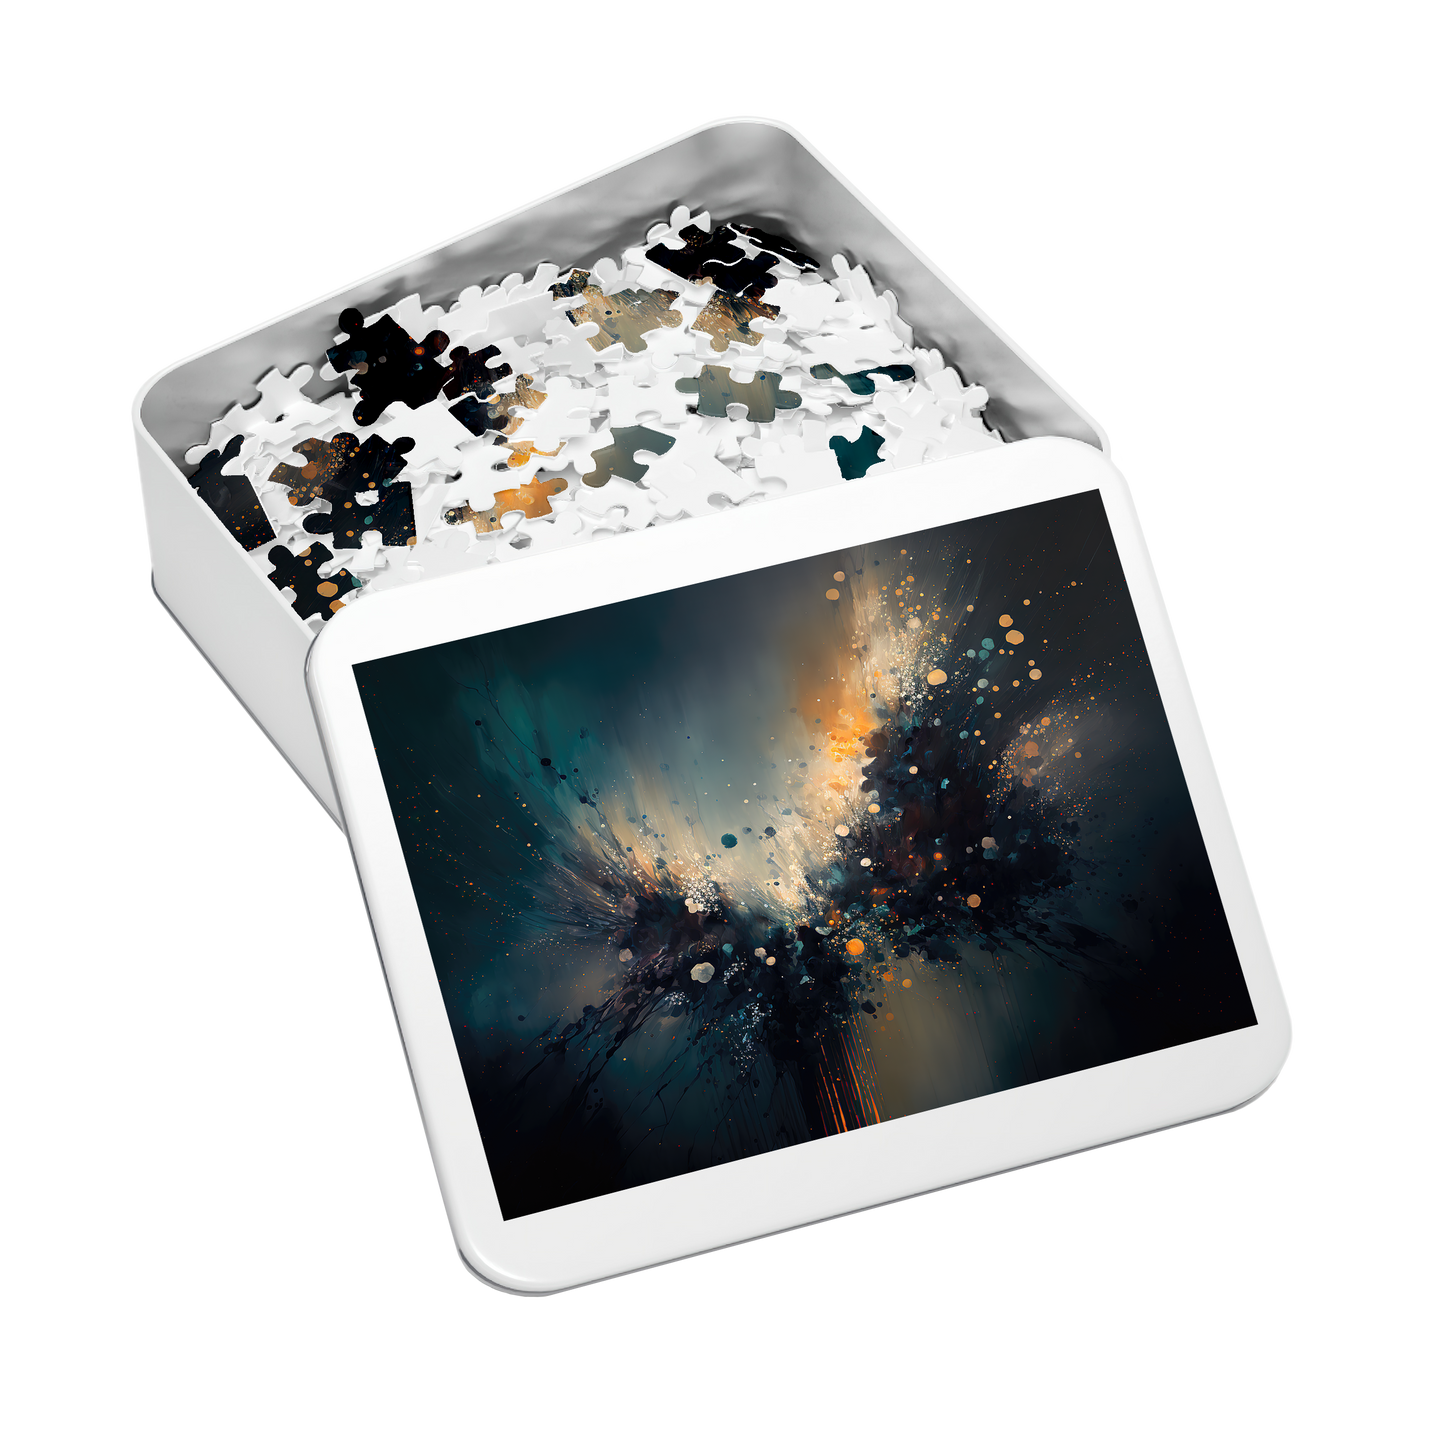 Starburst - Premium Jigsaw Puzzle - Celestial, Beautiful, Space Scape - Multiple Sizes Available